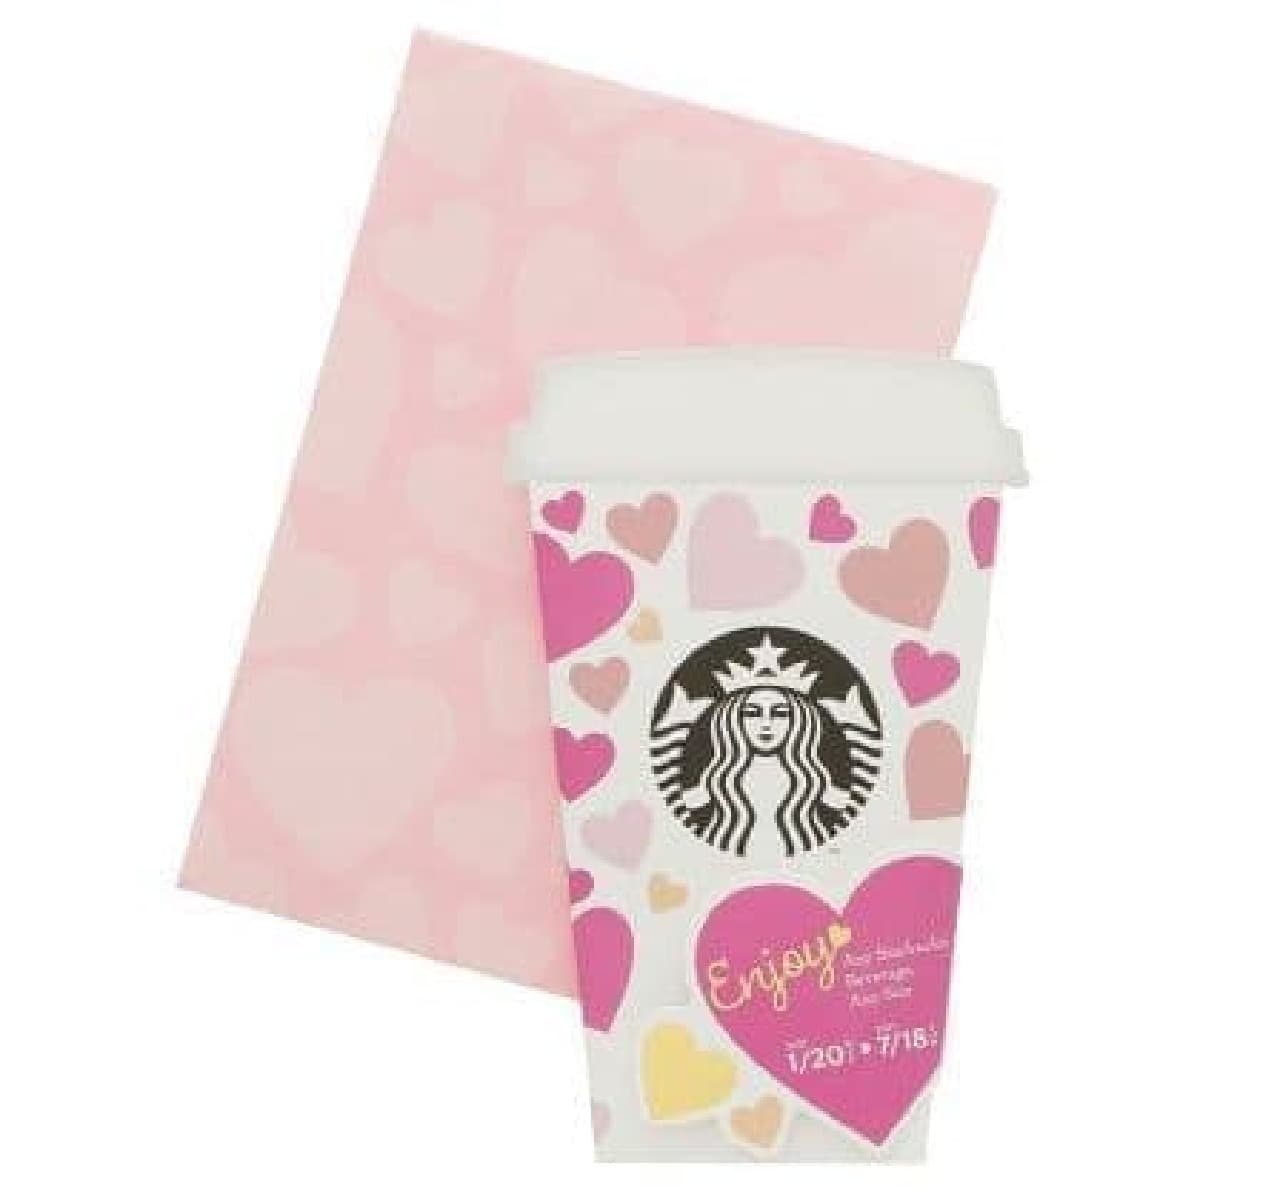 Starbucks "Valentine 2021 Beverage Card Paper Cup"